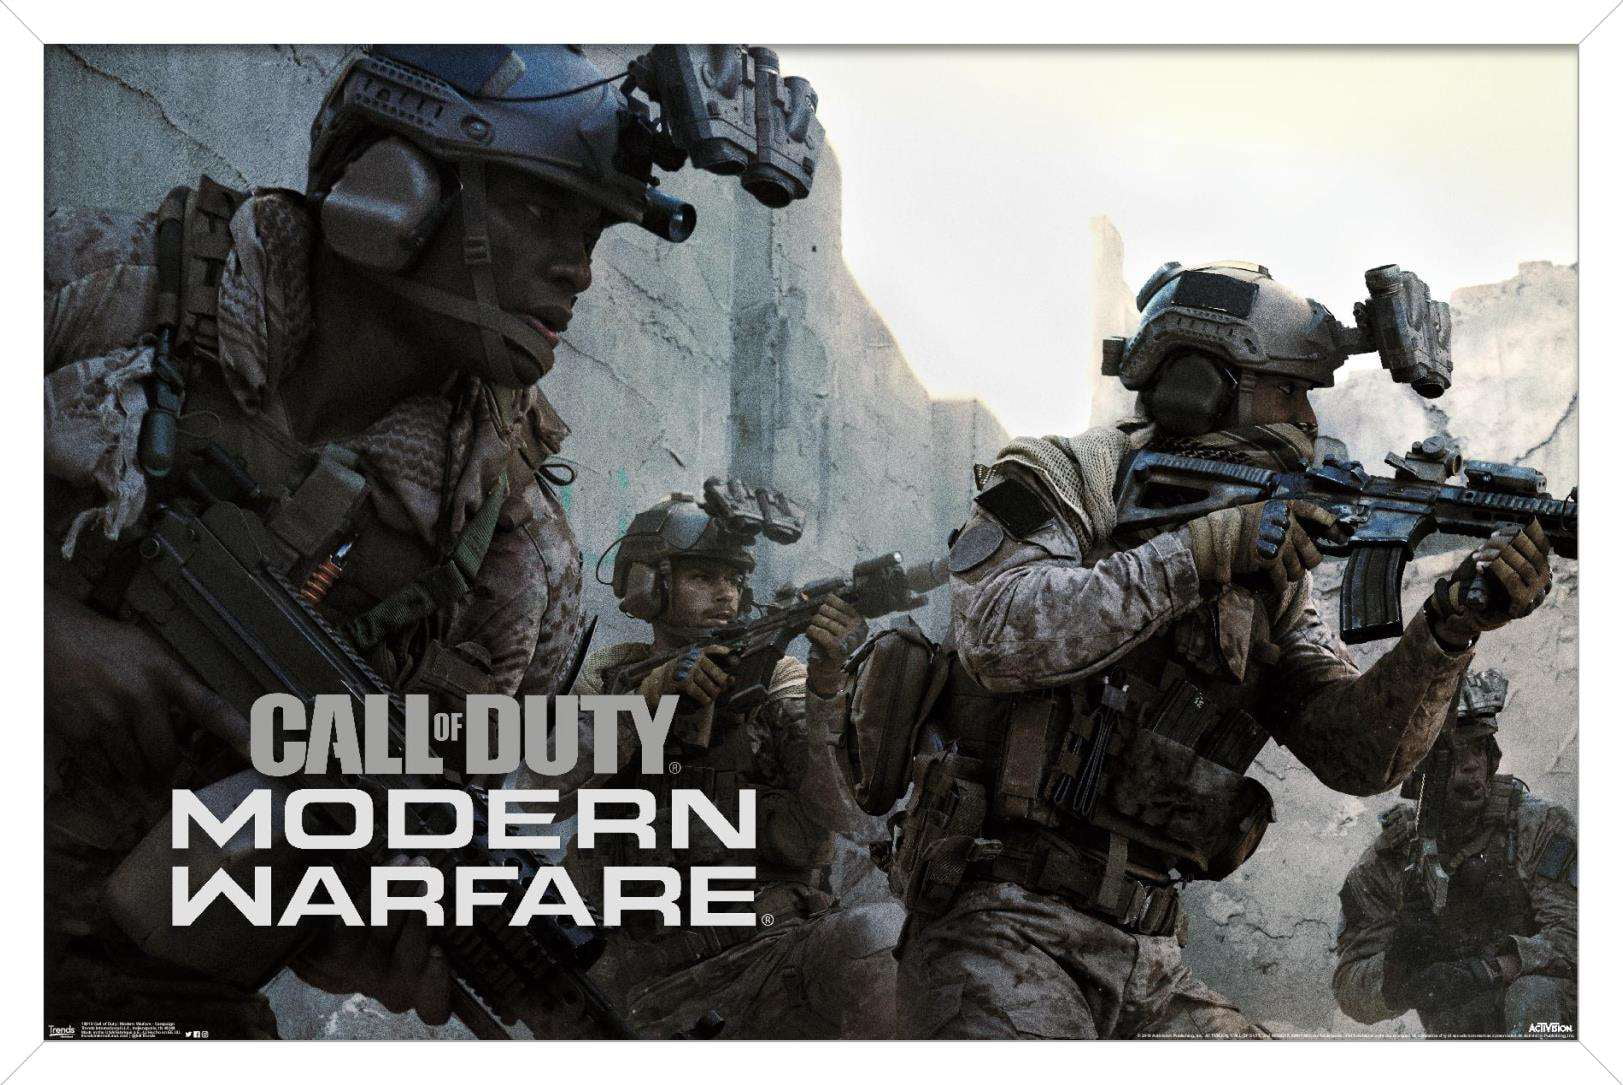 Call of Duty: Modern Warfare - Campaign Wall Poster, 22.375